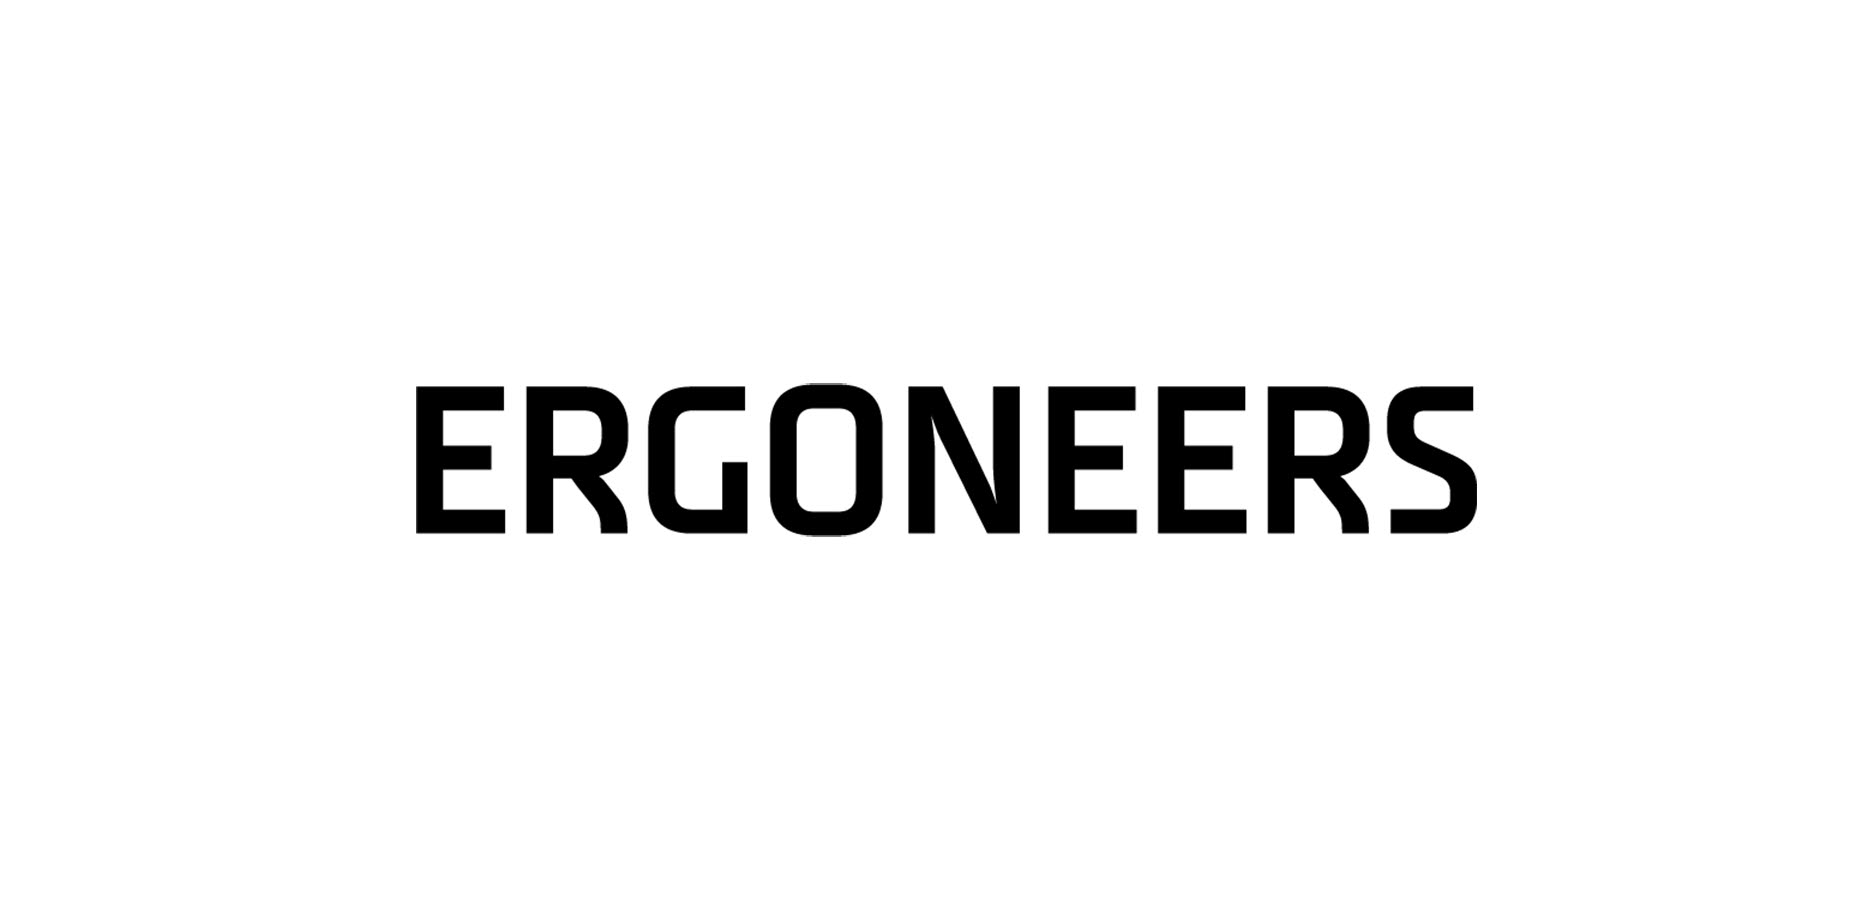 Ergoneers logo